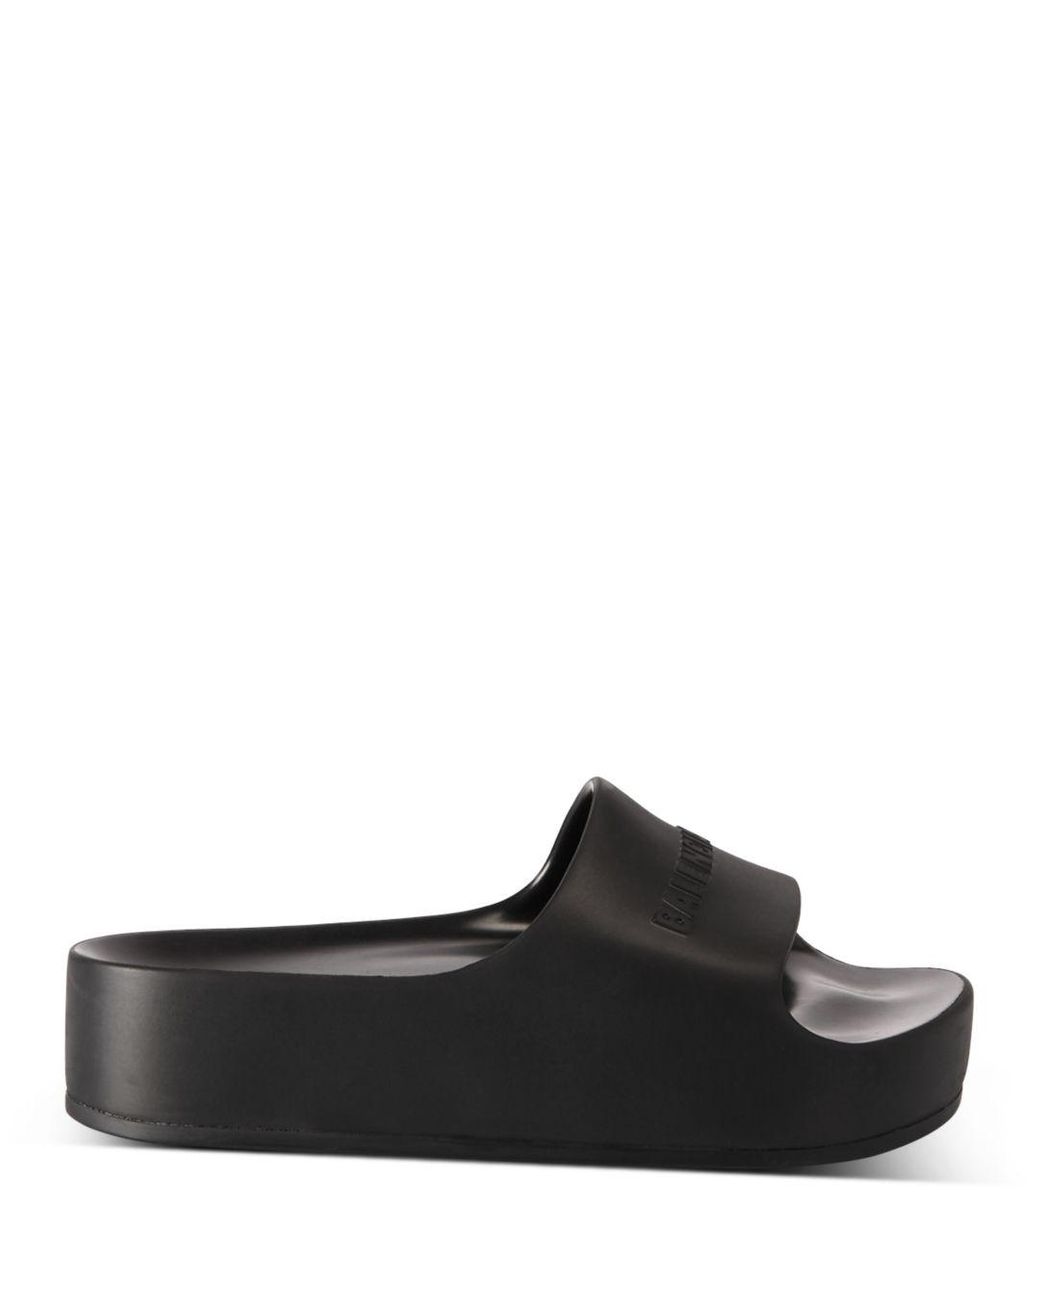 Balenciaga Women's Chunky Platform Slide Sandals in Black - Lyst